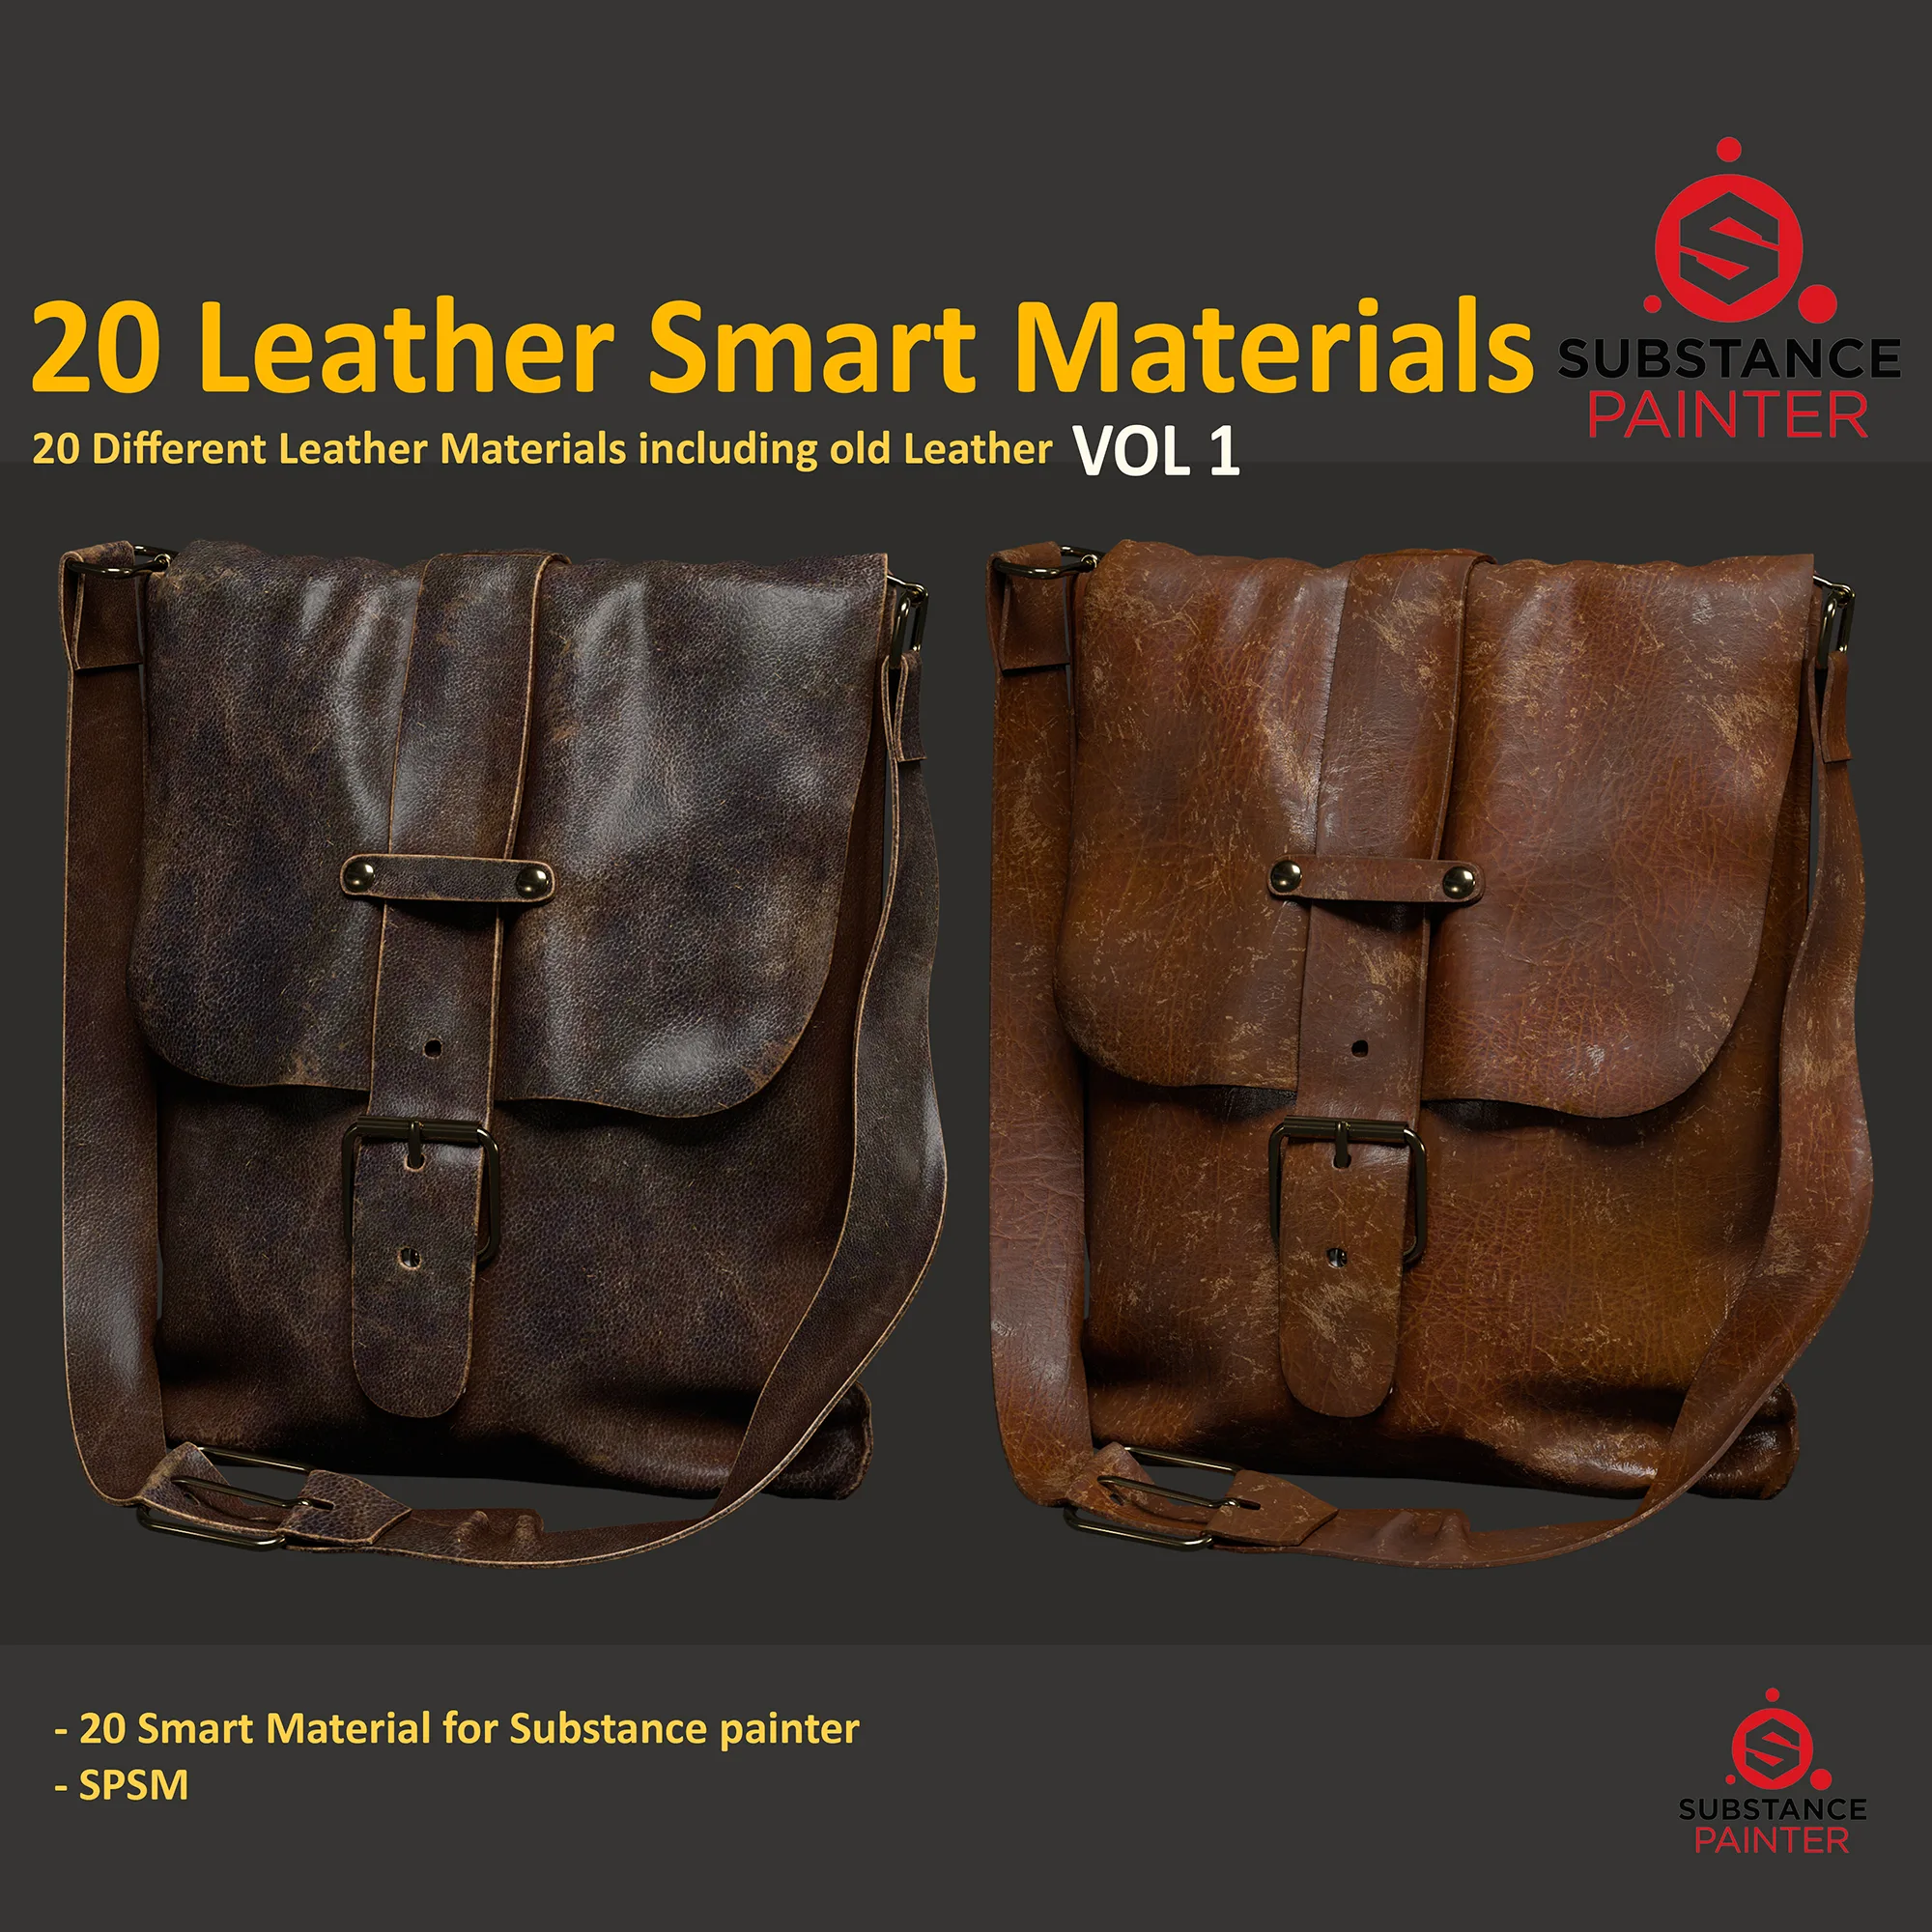 20 Leather Smart Materials - Vol 1